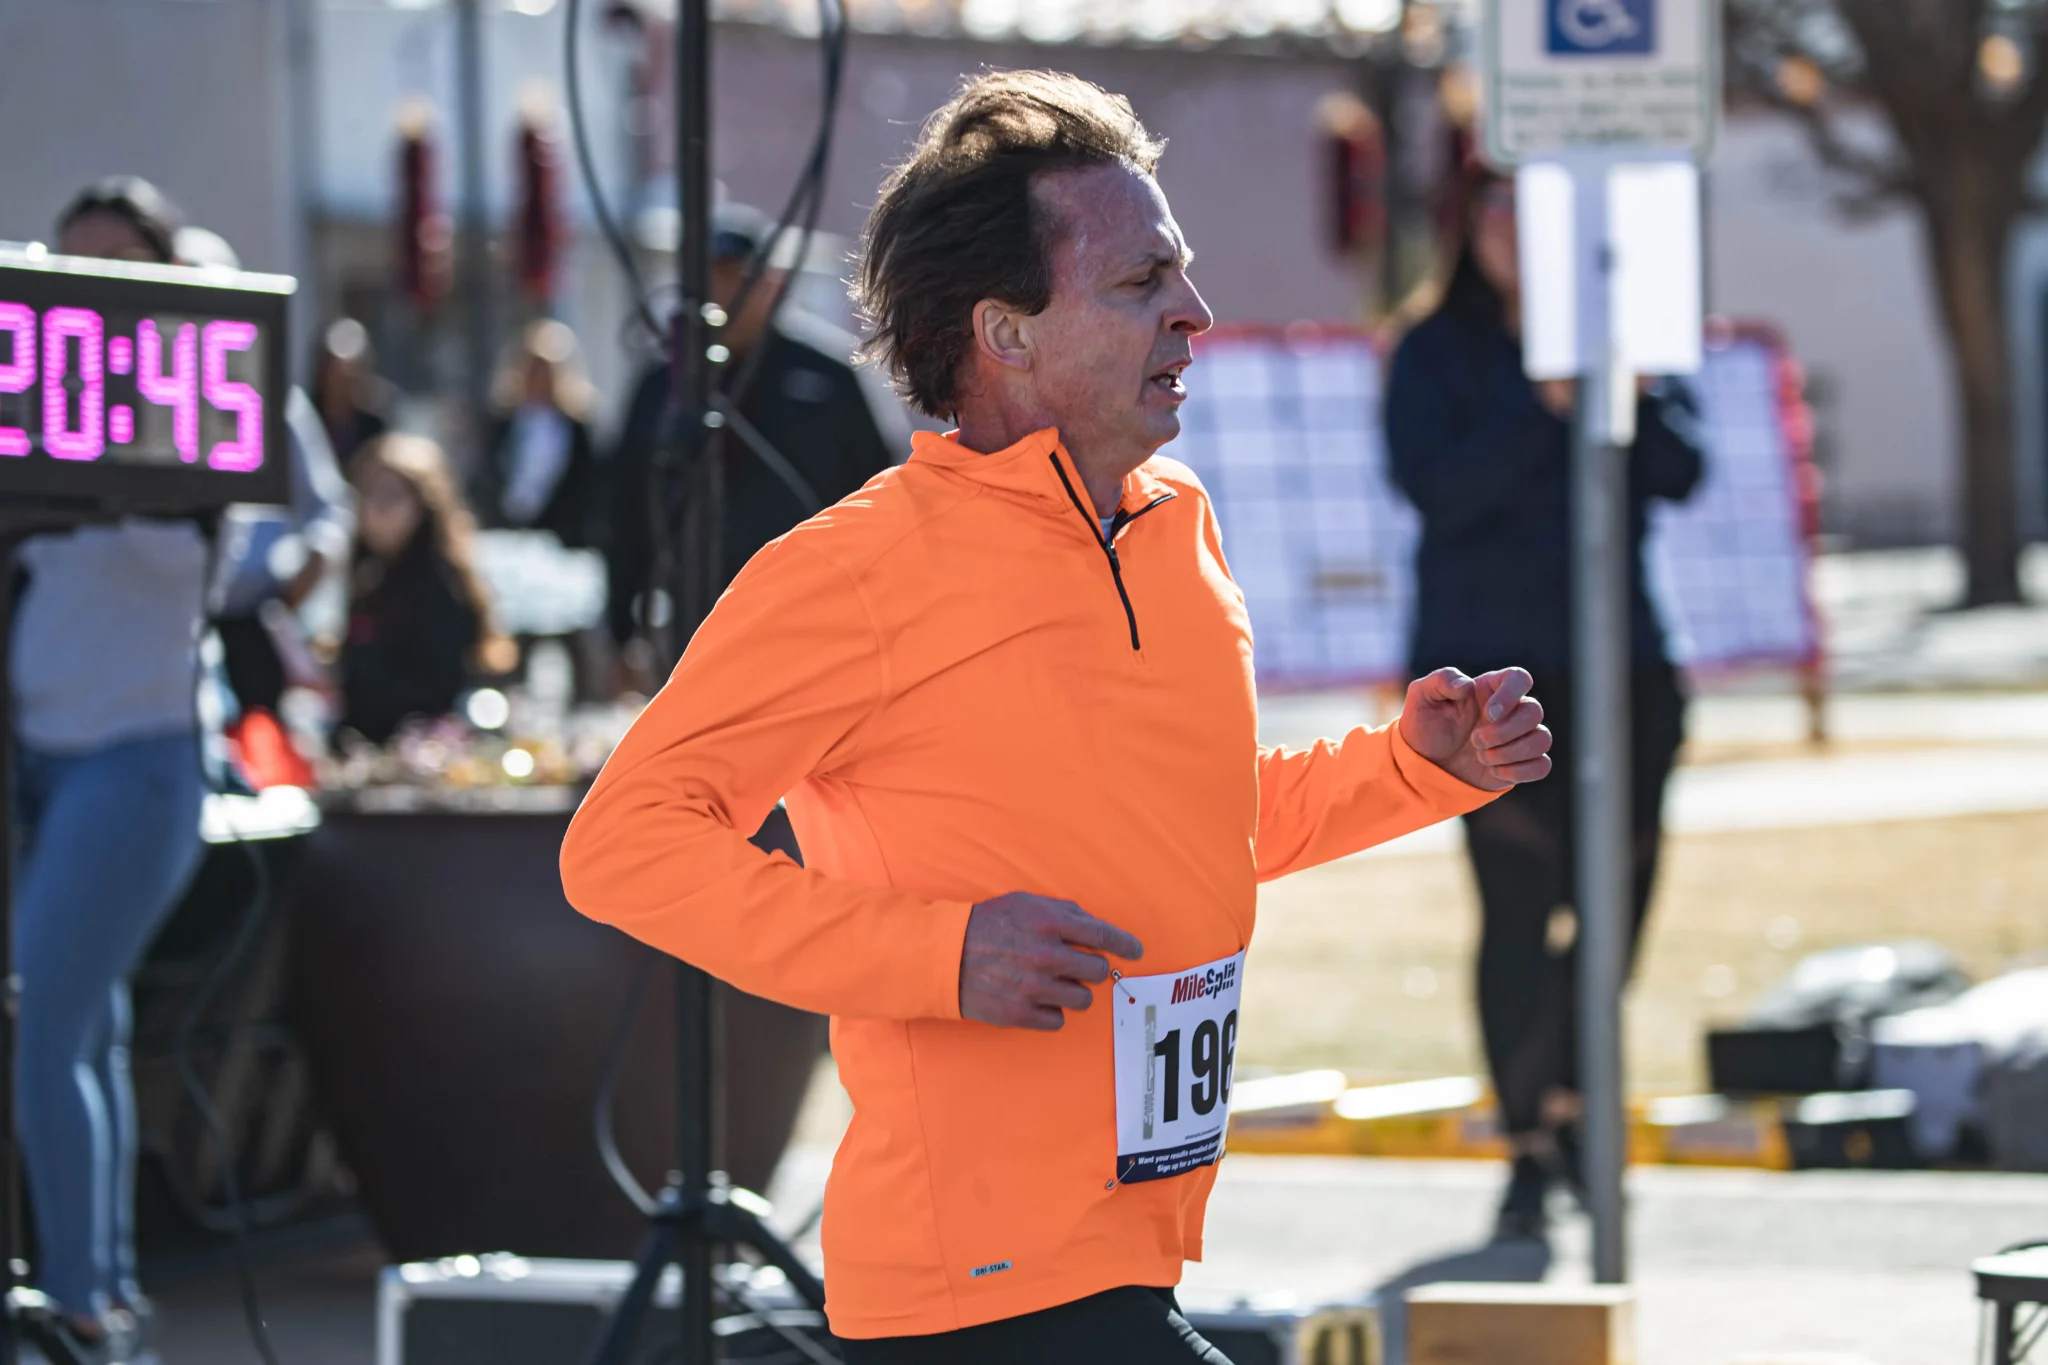 Runners finish at the Cupid's Chase 5K in Mesilla on Saturday, Feb. 12, 2022. Nathan J Fish/Sun-News - lcsun-news.com